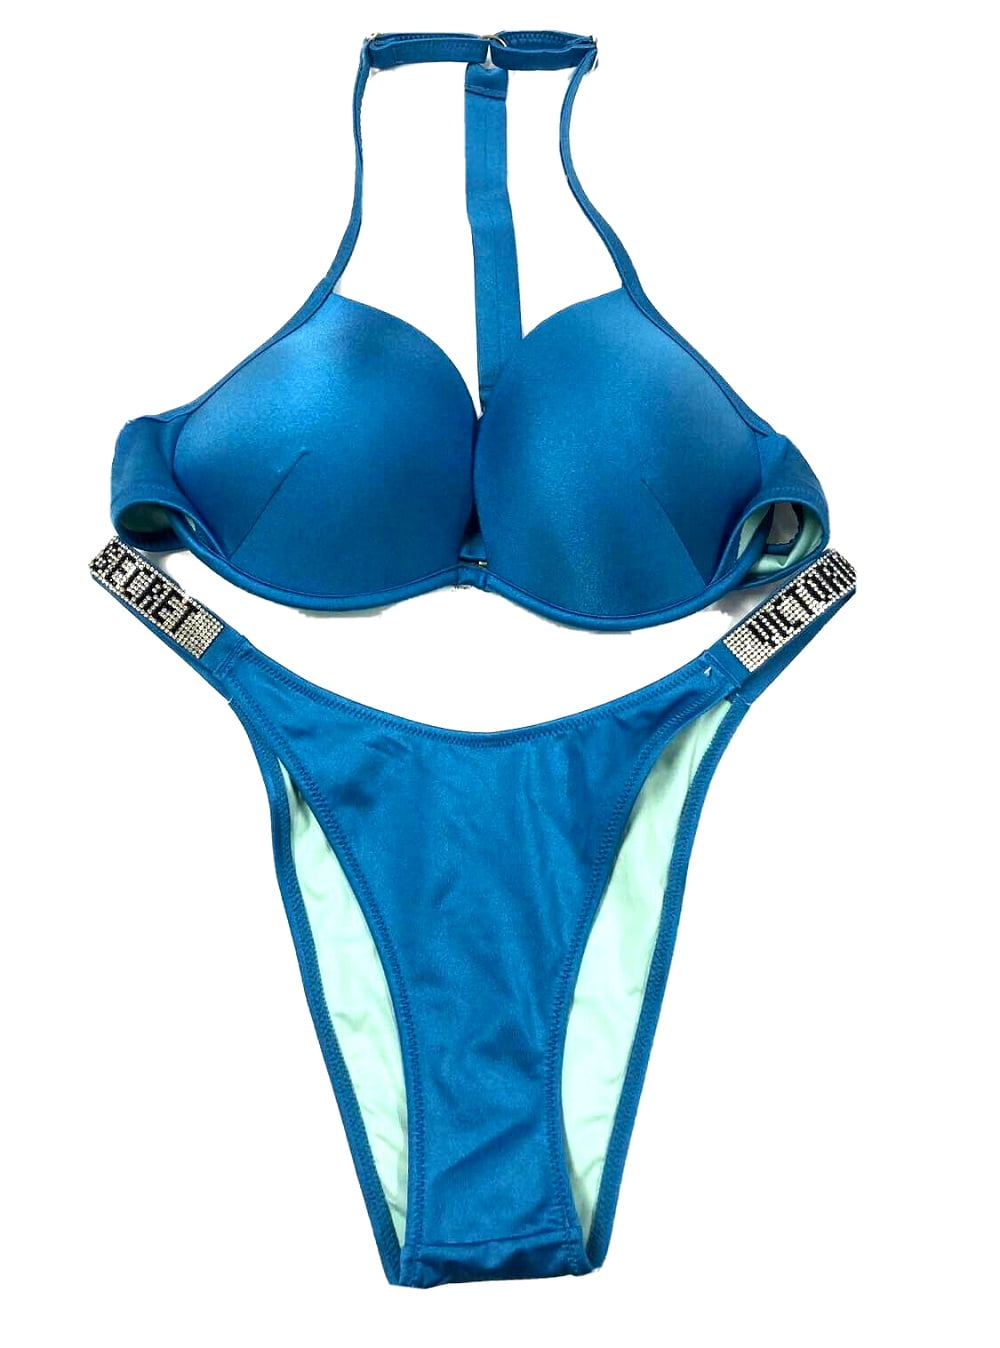 Victoria's Secret Women's Floral Bikini Top & Bottom Set Blue Size 38C, $55  NWT 